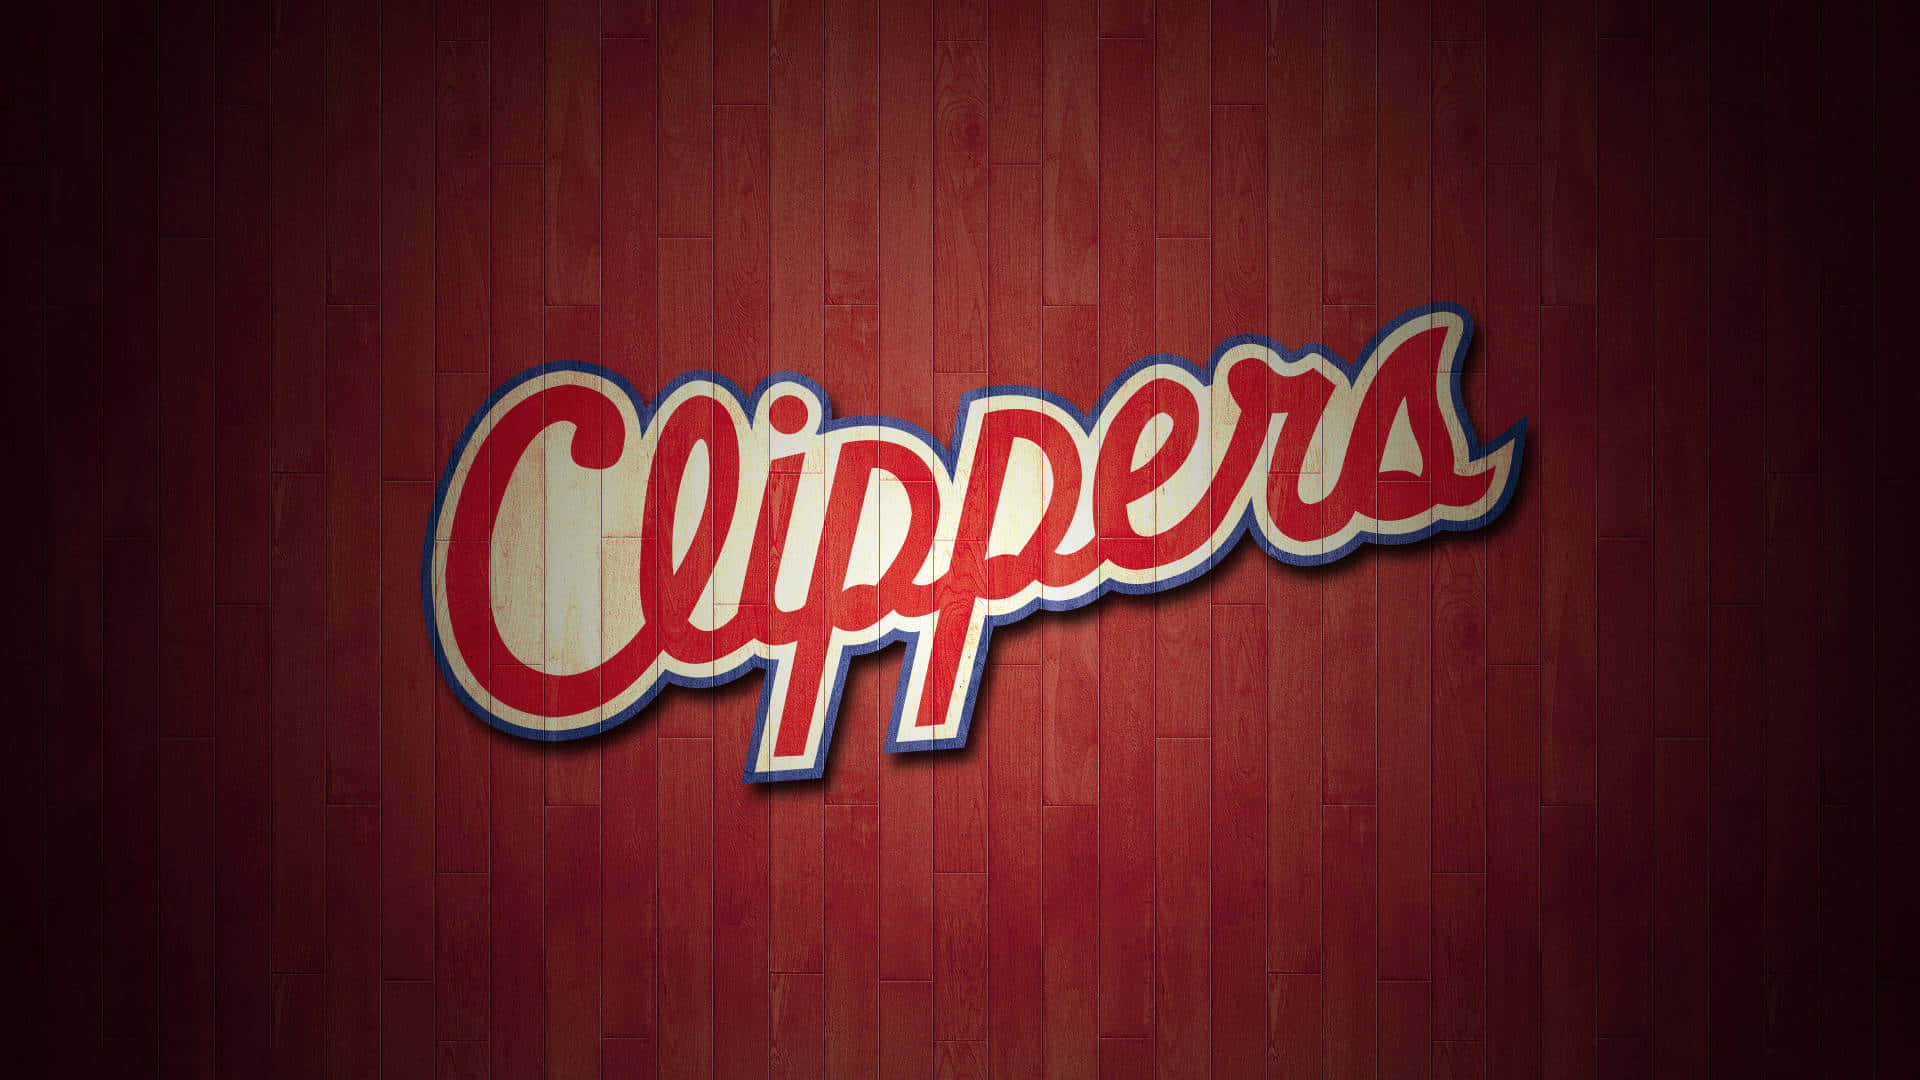 Röttbasketlag La Clippers Typografi. Wallpaper